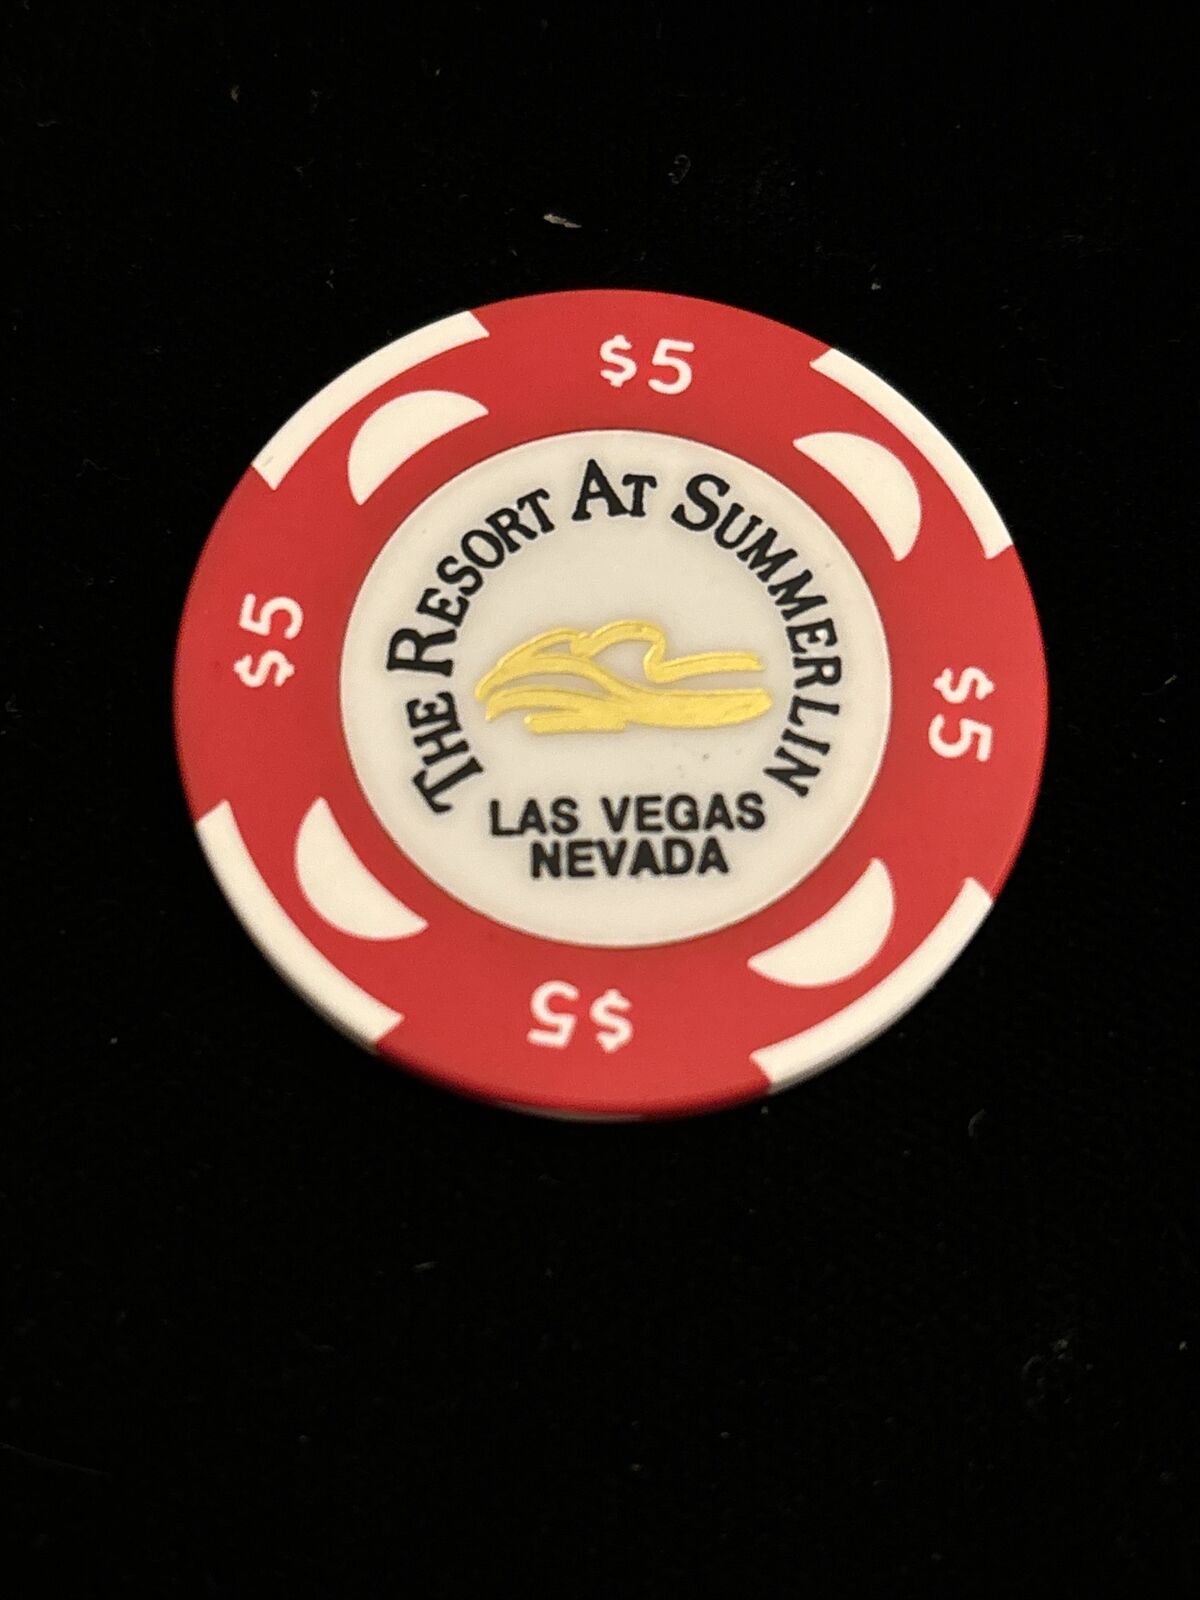 $5 Casino Chip. Resort At Summerlin, Las Vegas, NV. - New Excellent Condition